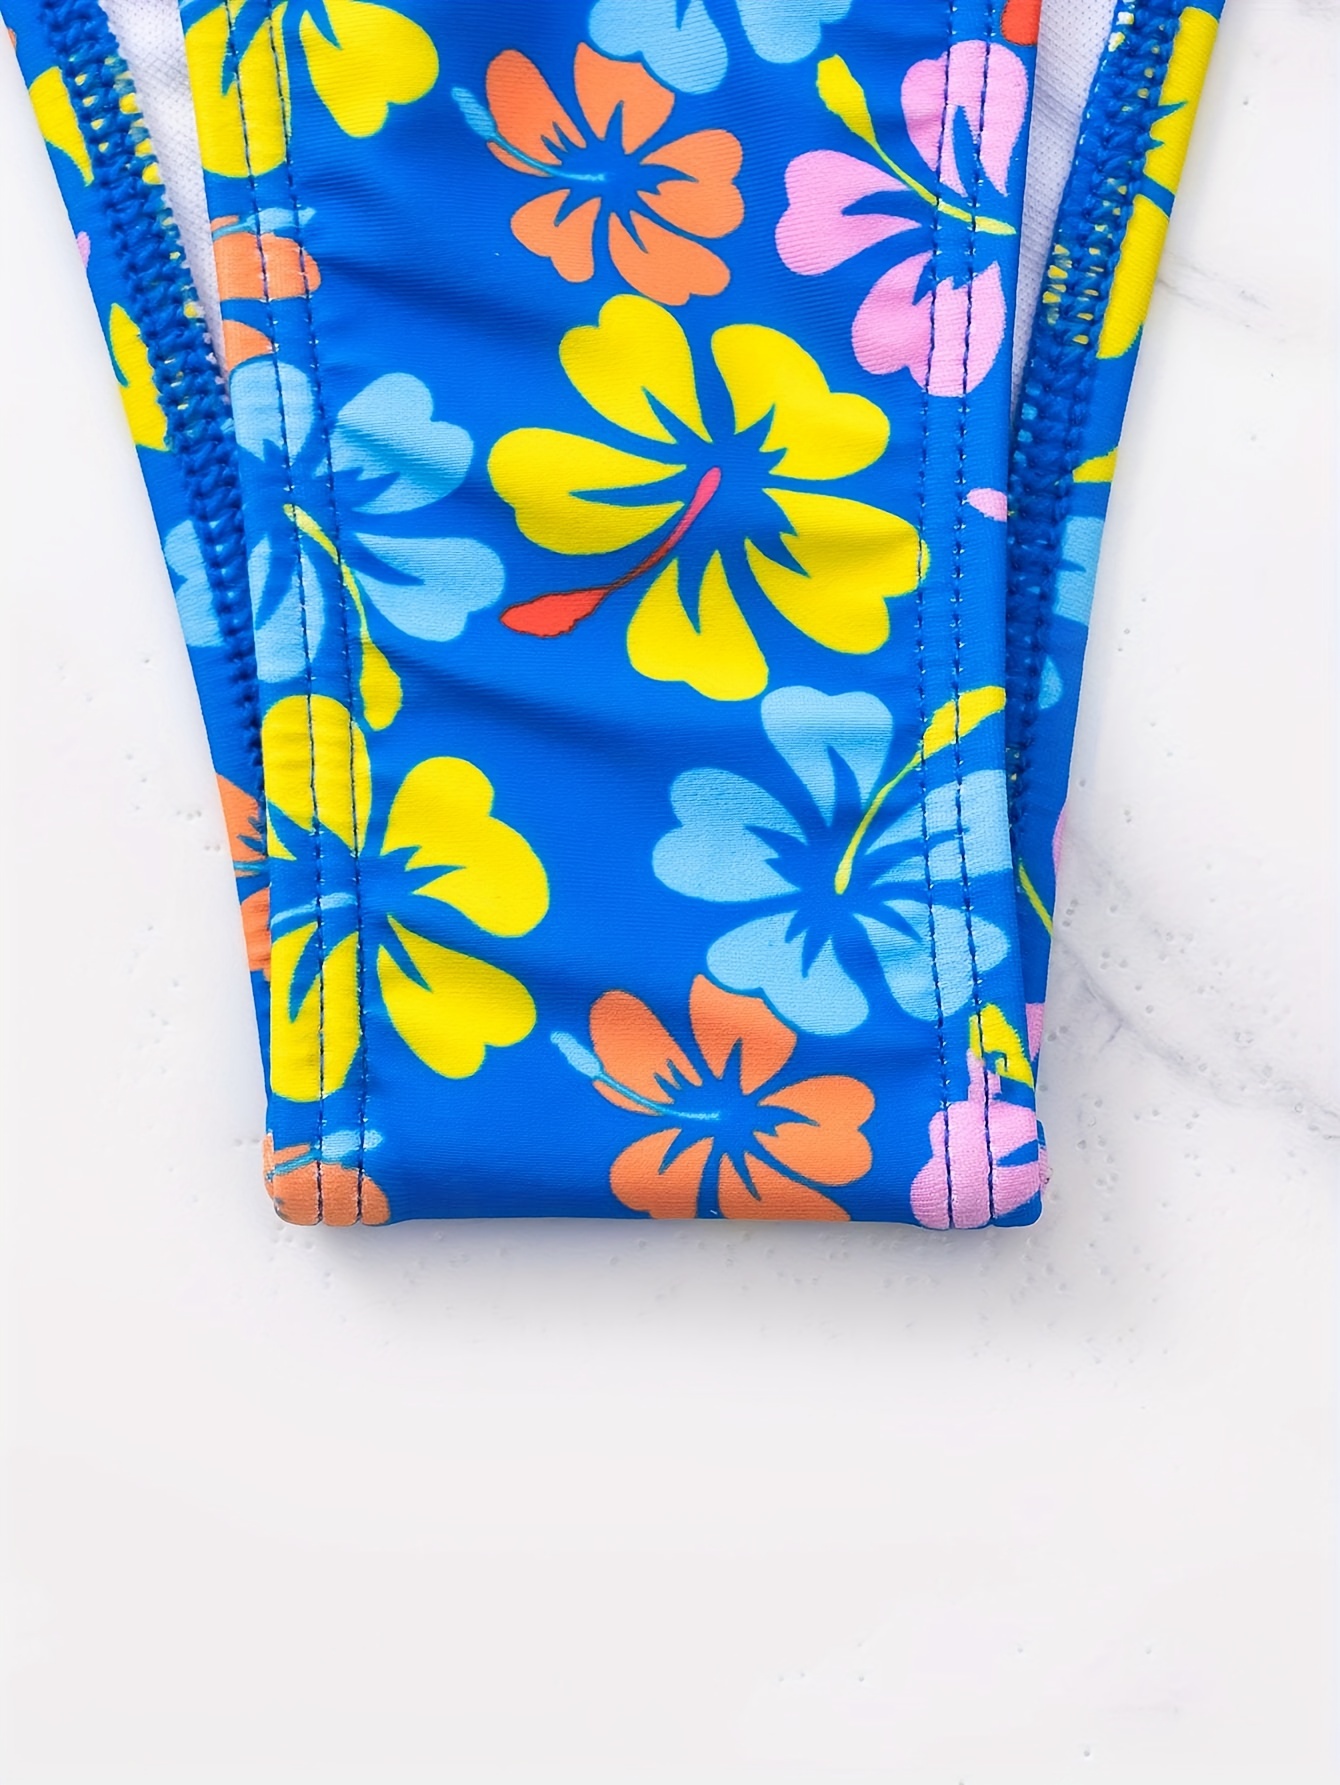 Floral Print Tie Side 2 Piece Set Bikini, Stretchy Triangle Cute Swimsuits,  Women's Swimwear & Clothing